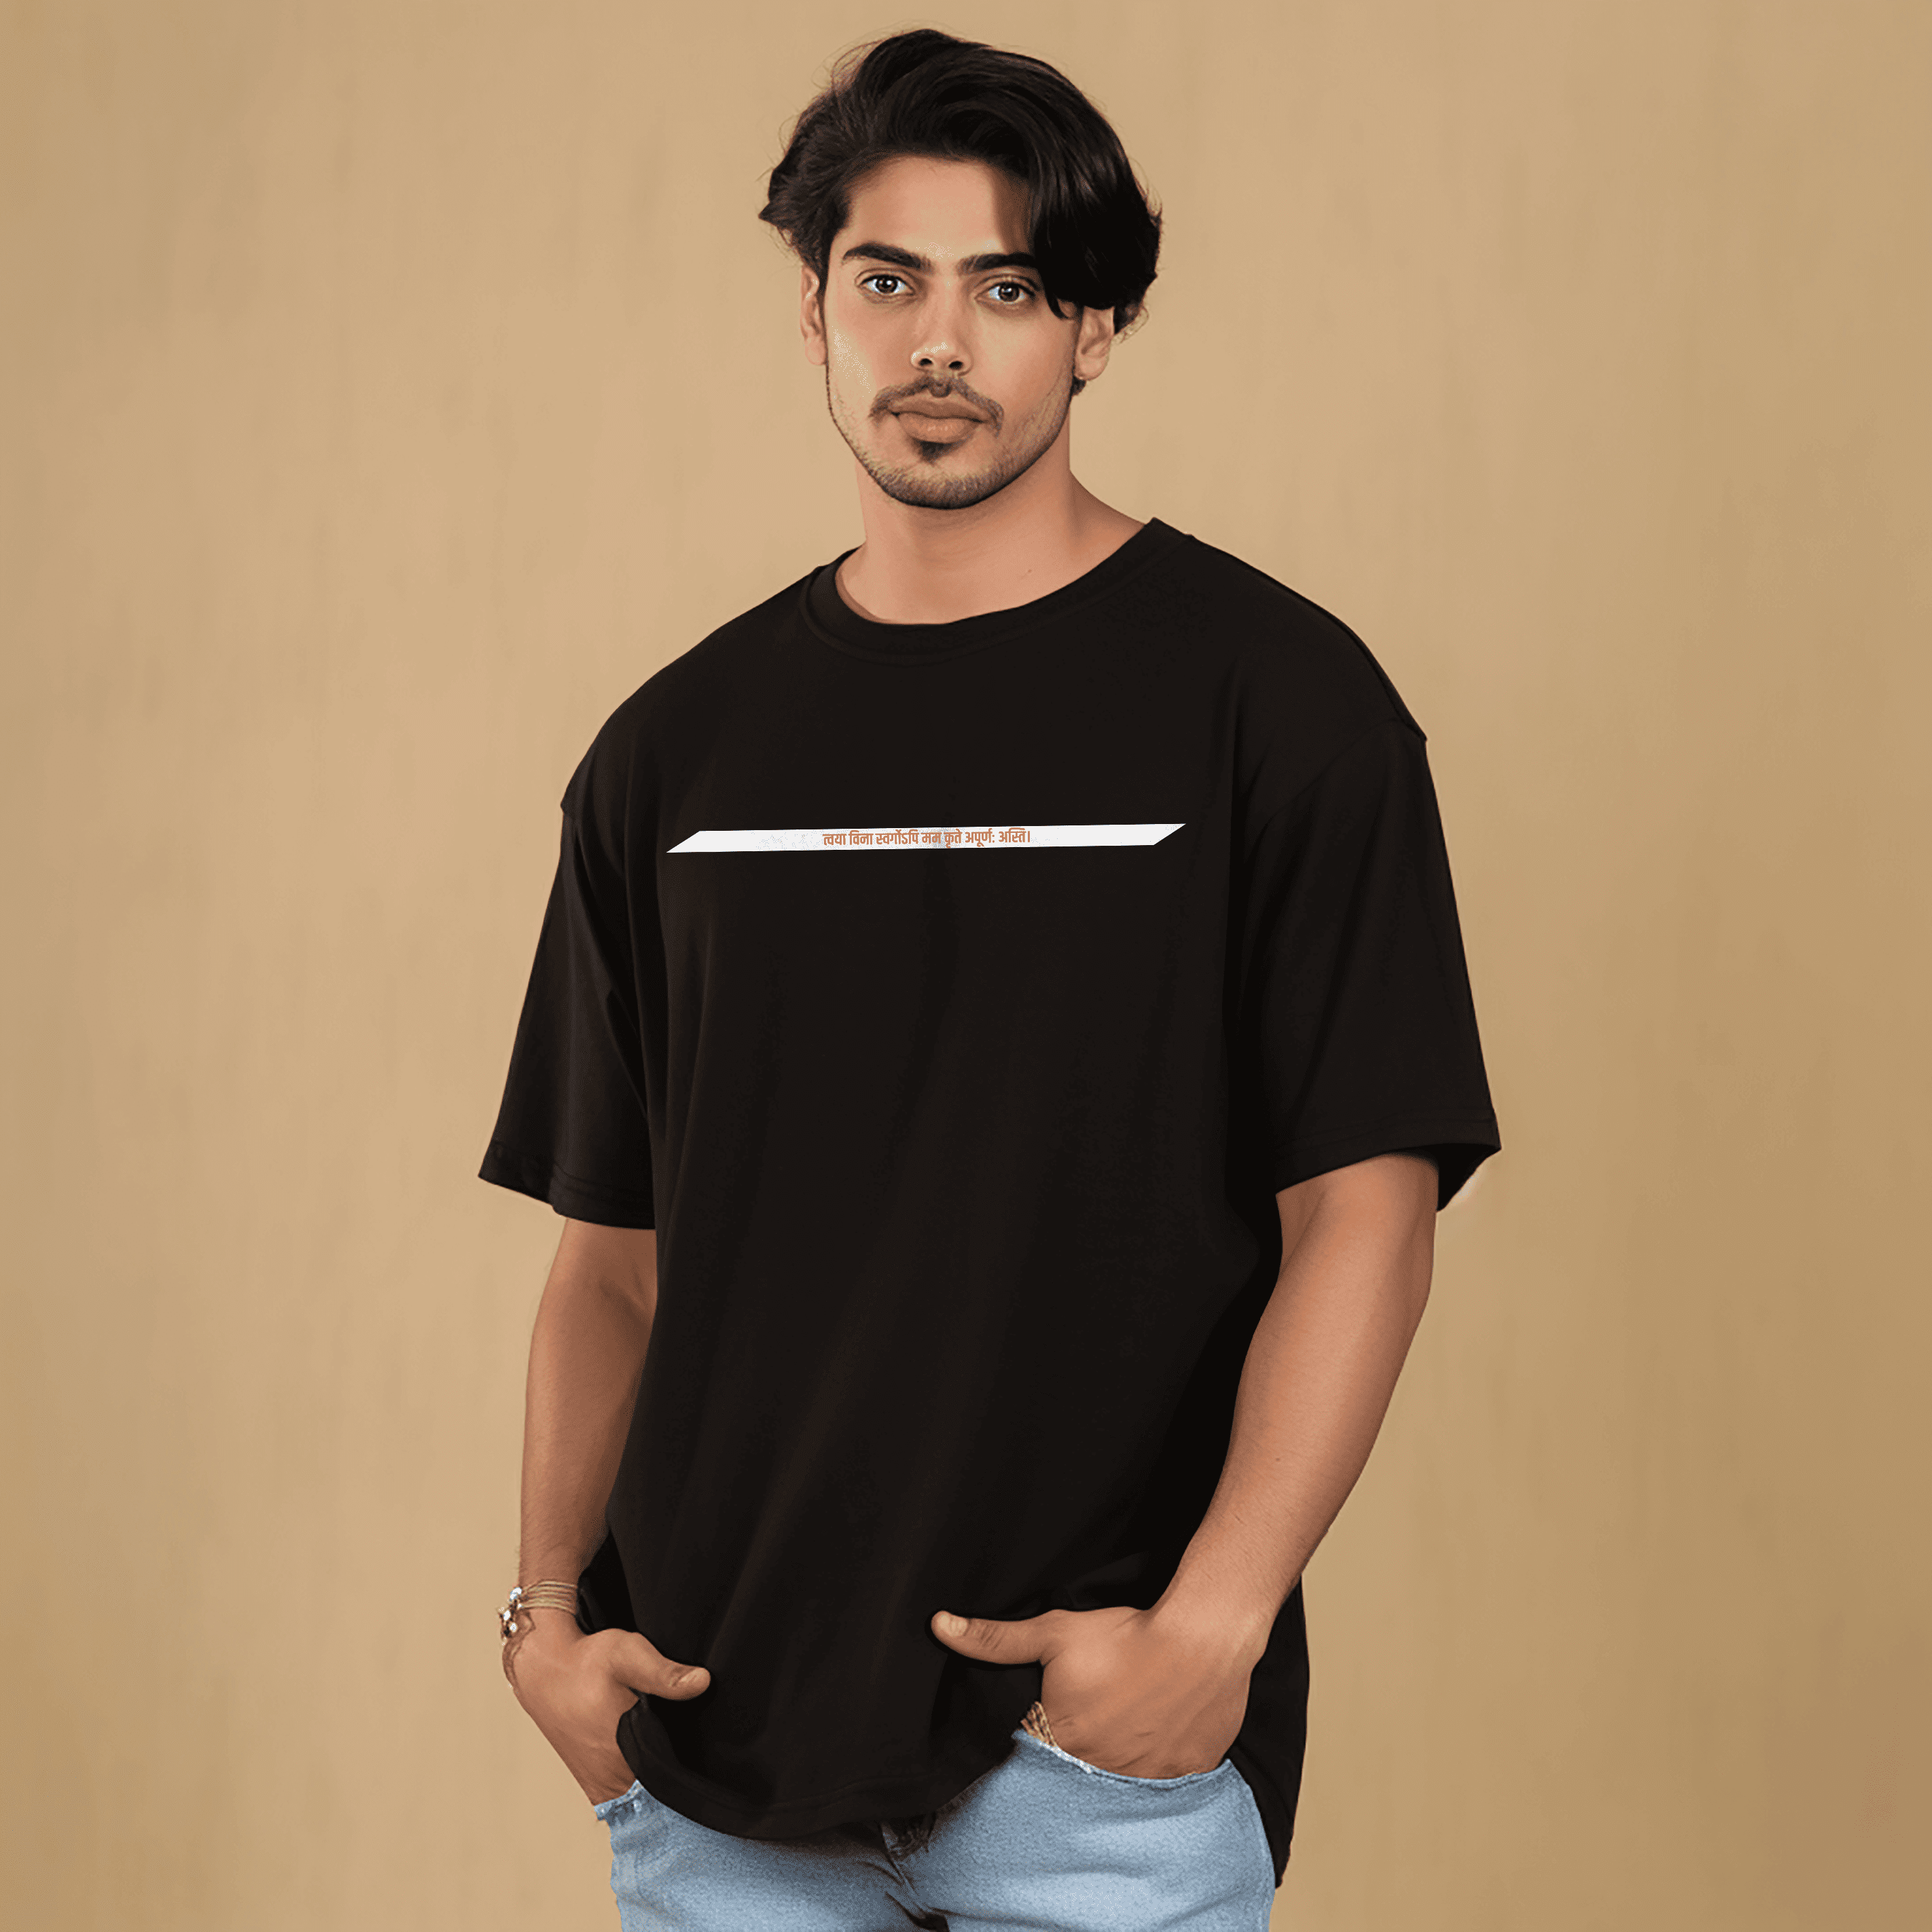 Sita Ram Printed Black Oversized Tshirt for Men